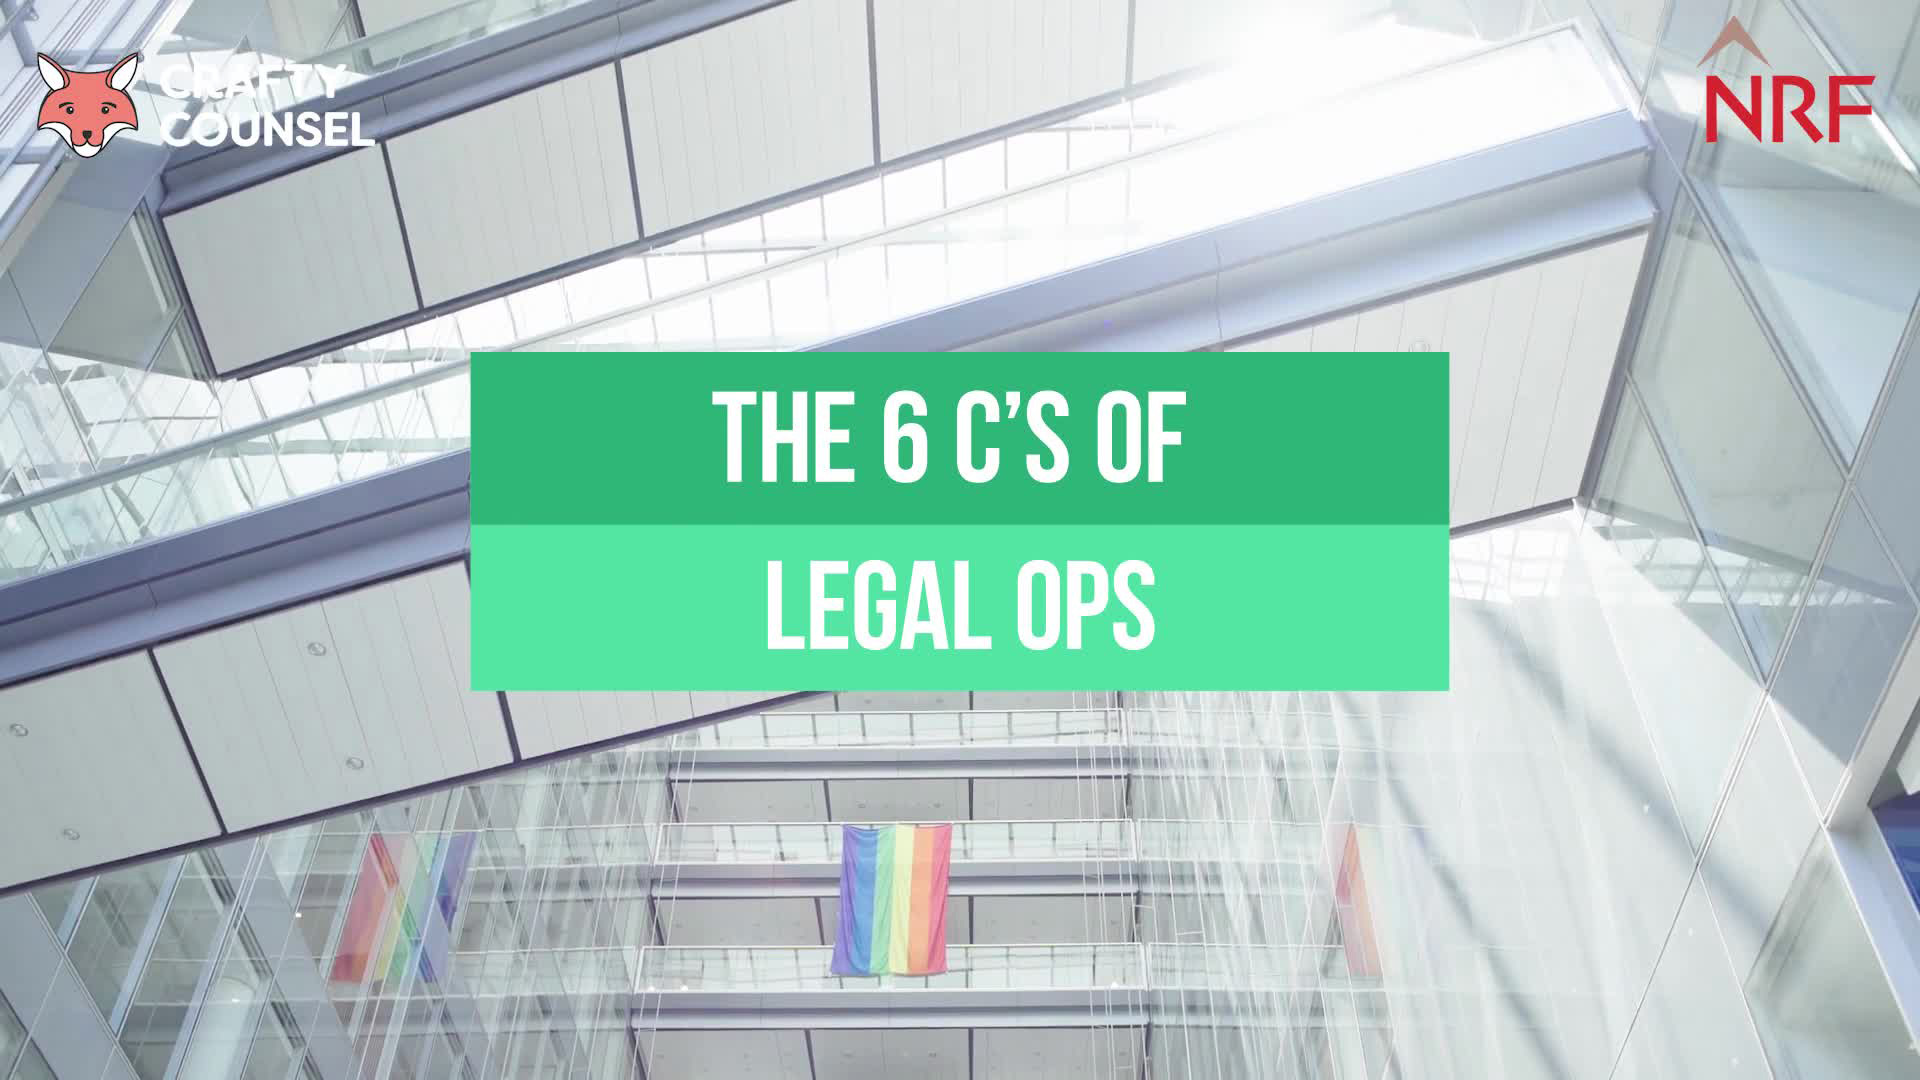 Episode 4: 6 C’s of Legal Ops – Change management